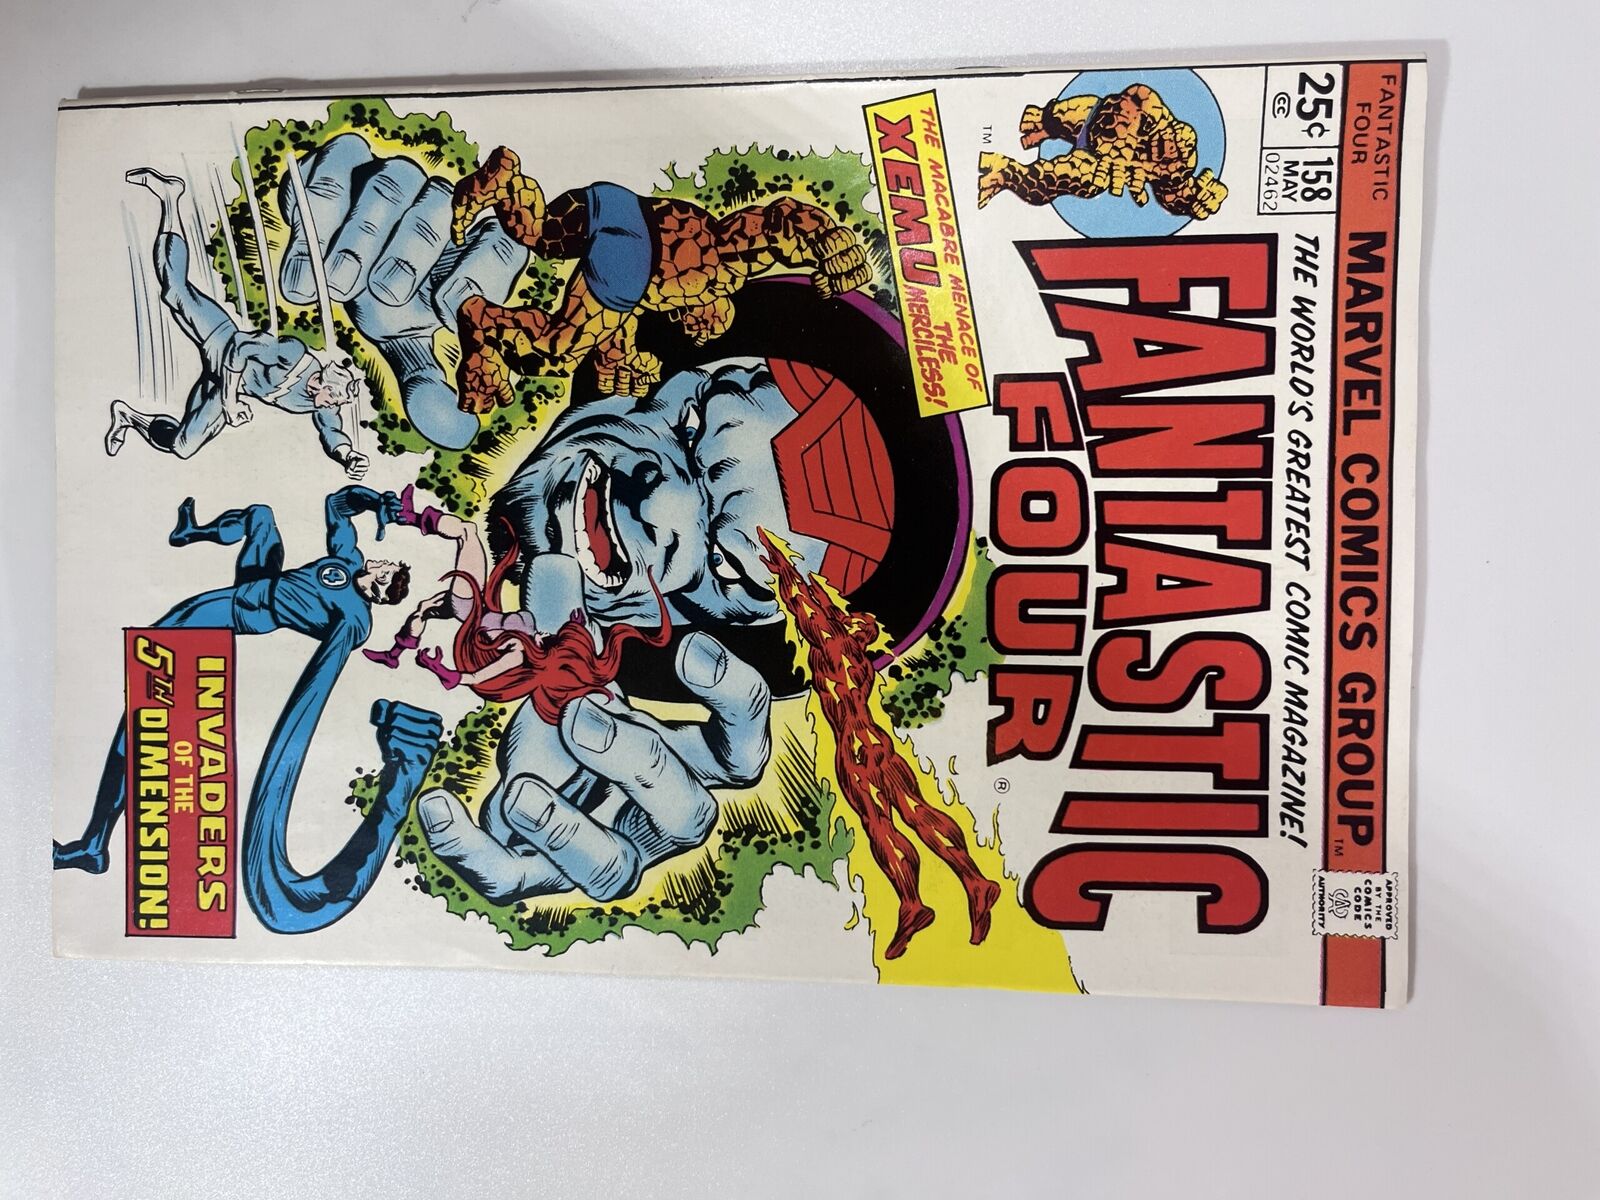 Fantastic Four #158 (1975) in 8.5 Very Fine+